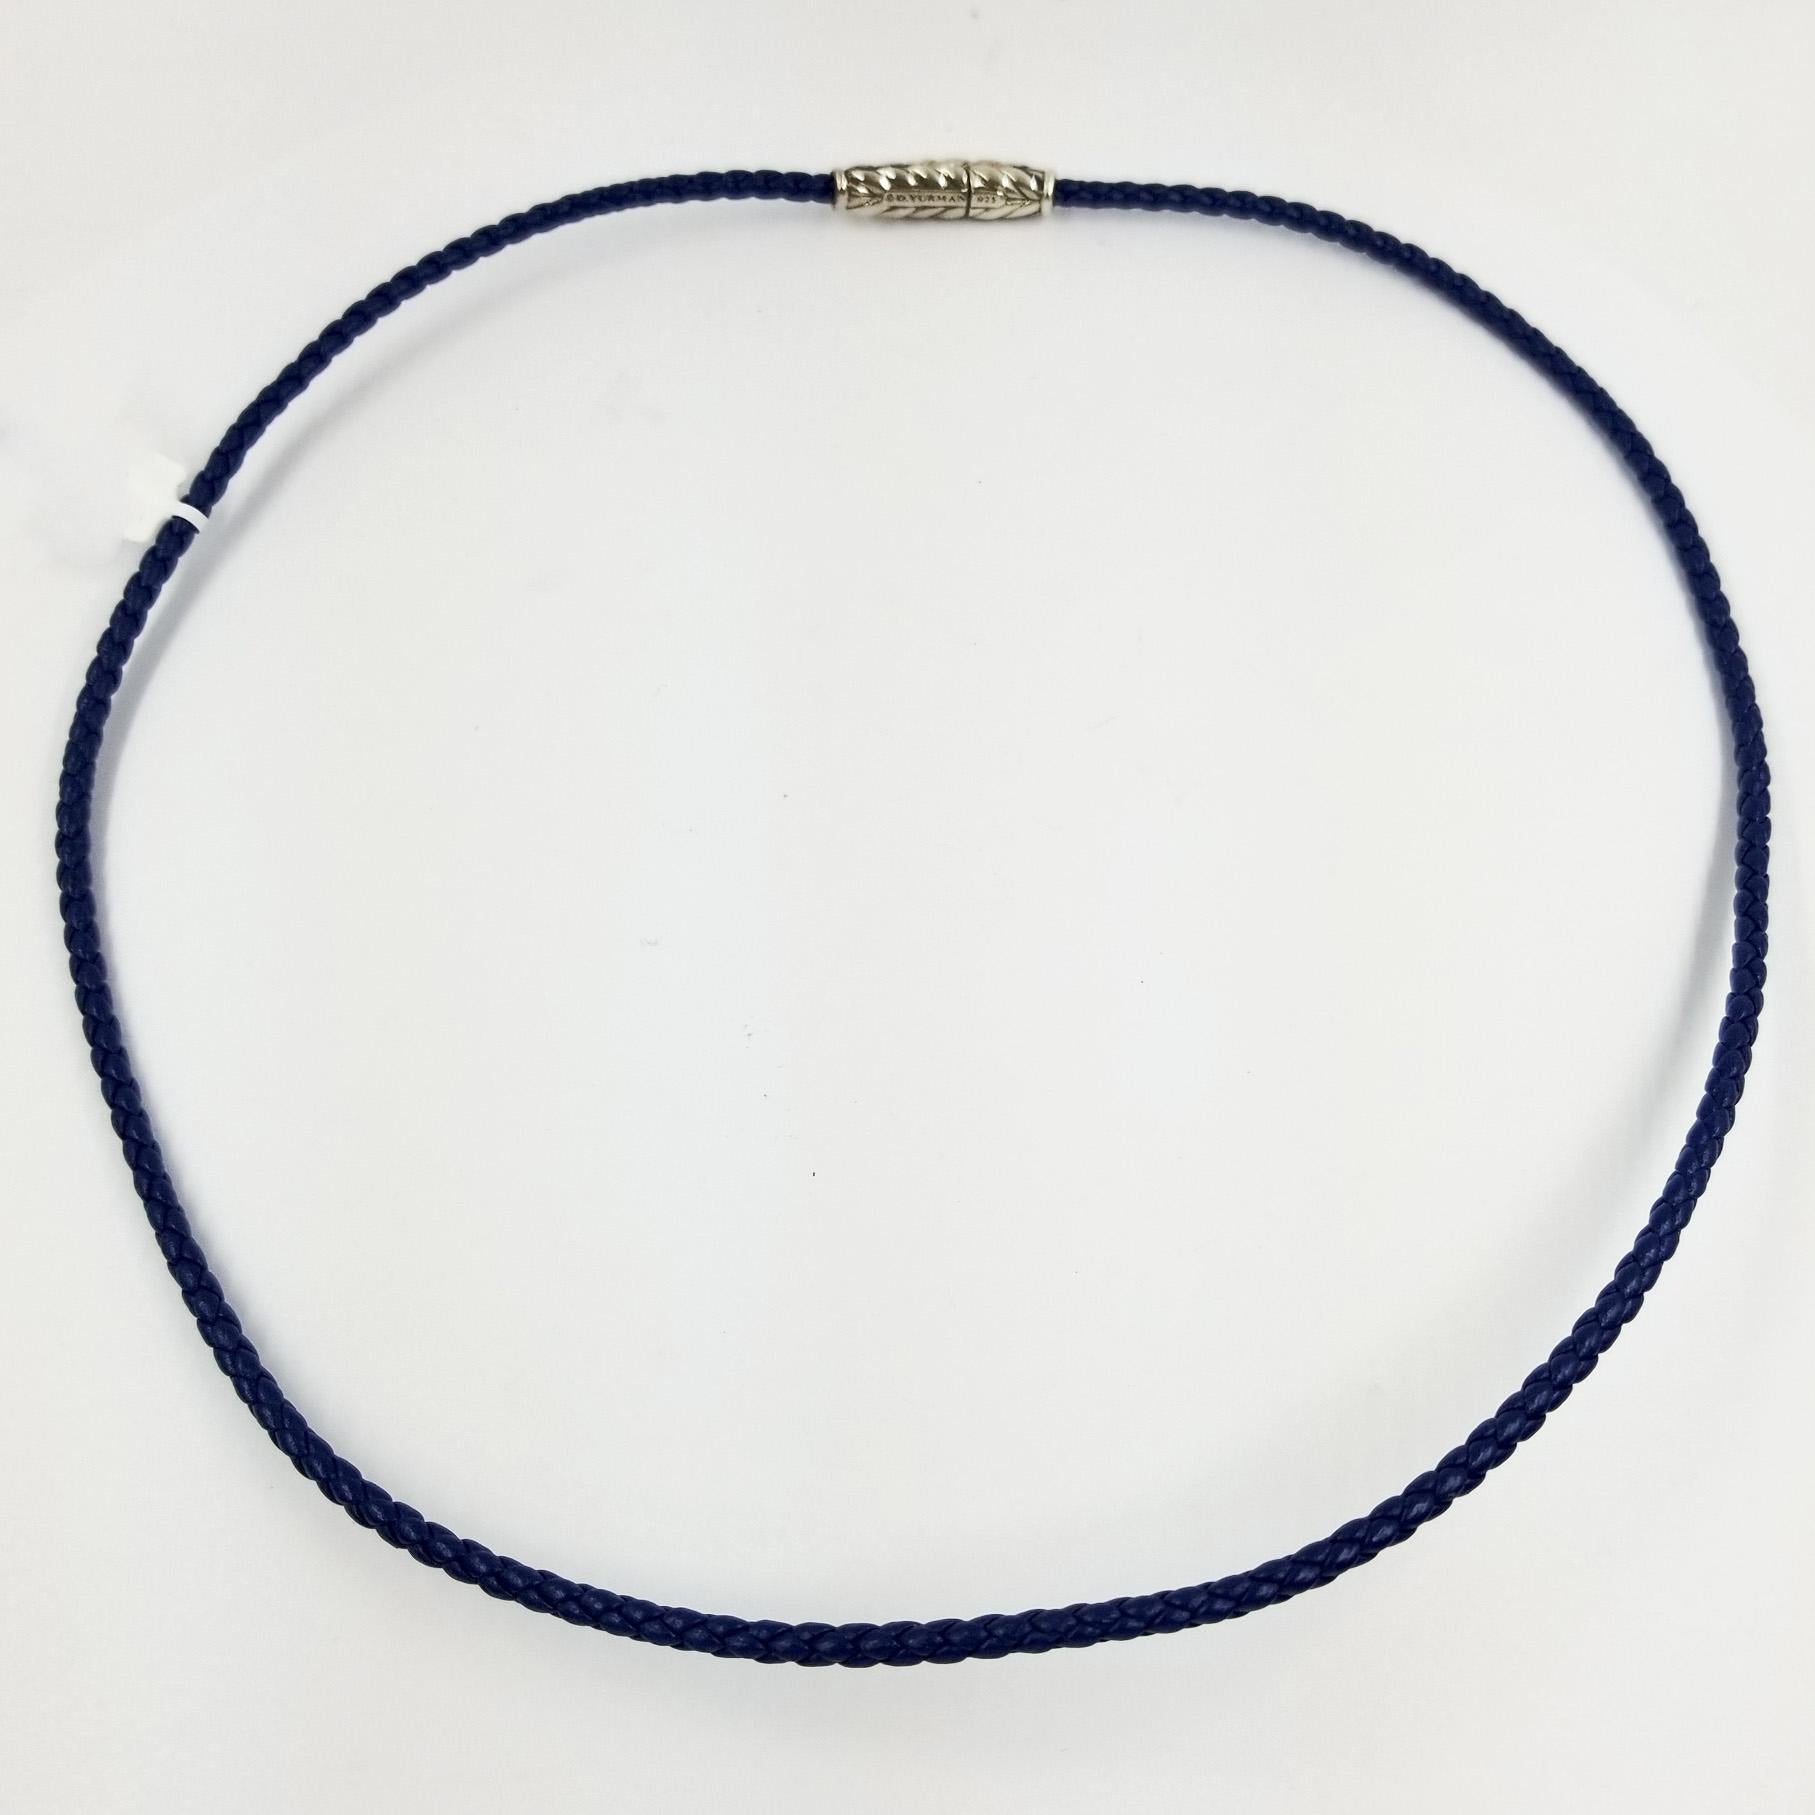 Women's David Yurman Sterling Silver and Blue Leather Wrap Bracelet